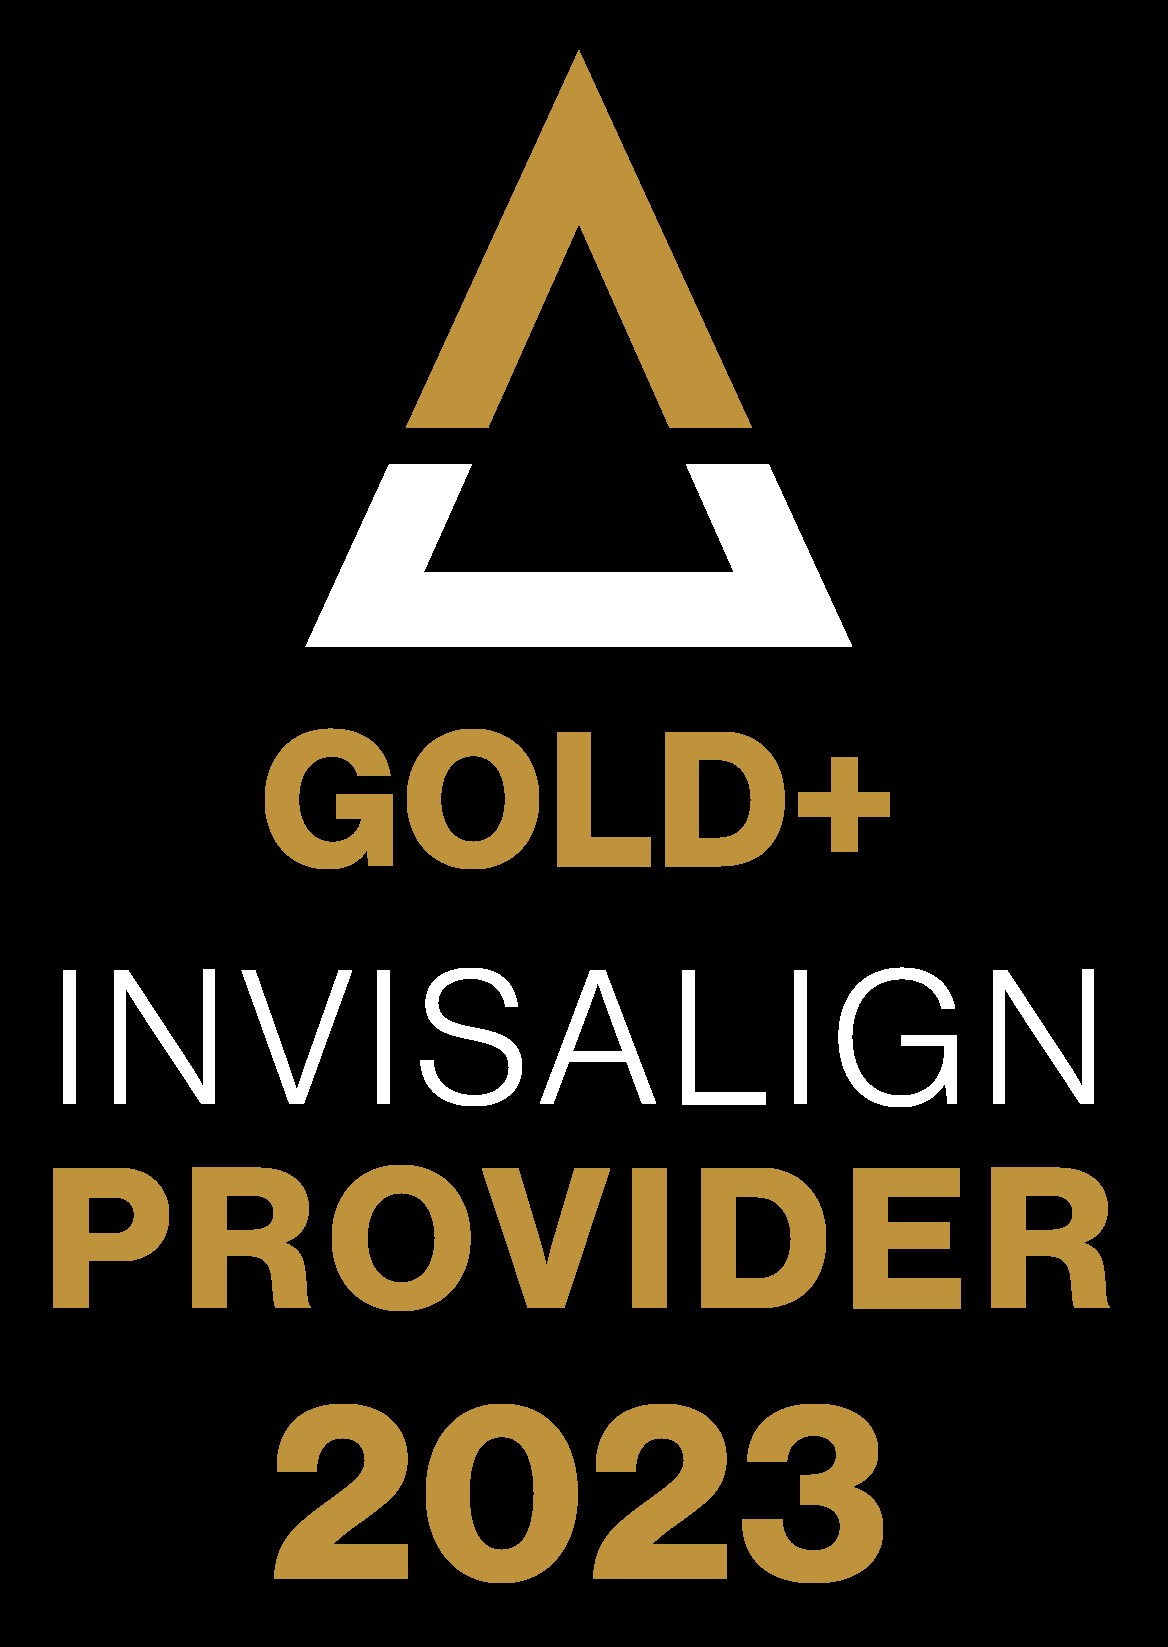 Gold+ Invisalign Provider 2023 - Dentist 53538